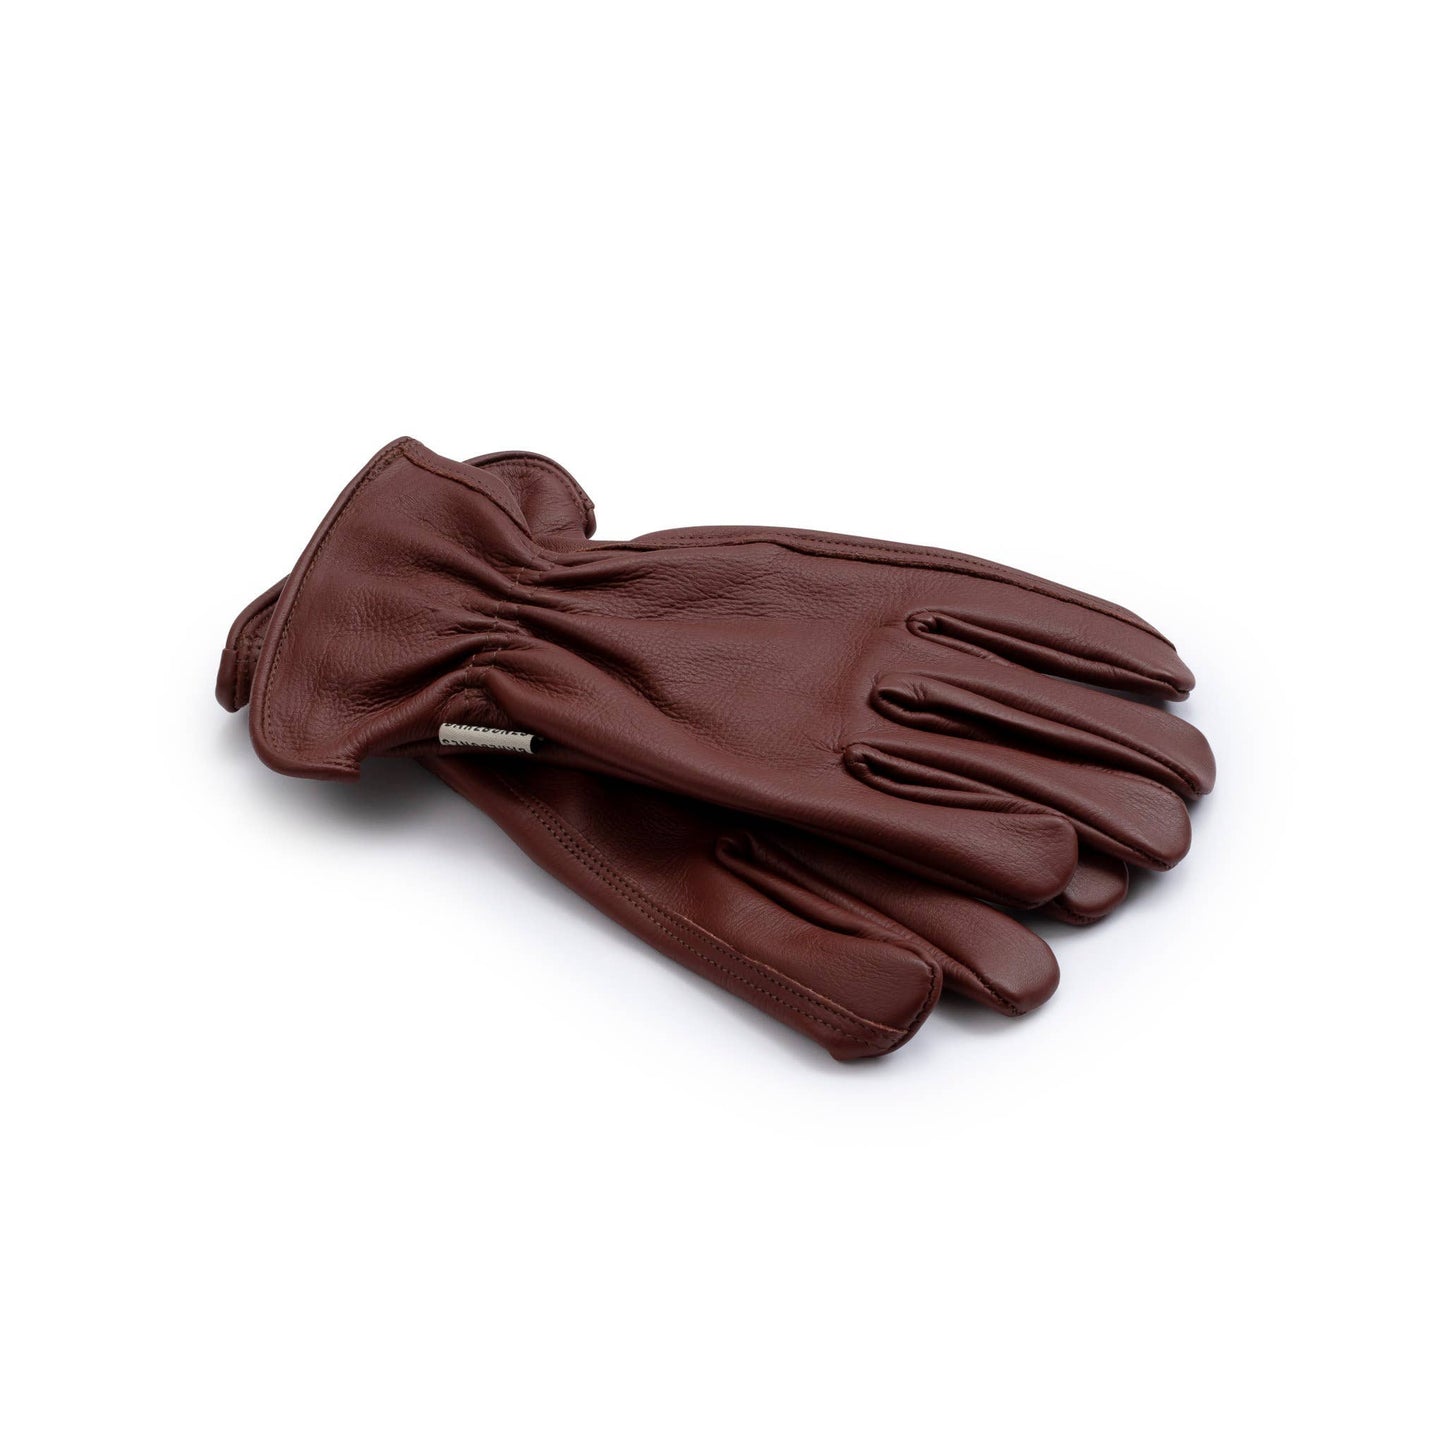 Cognac Work Glove - Small